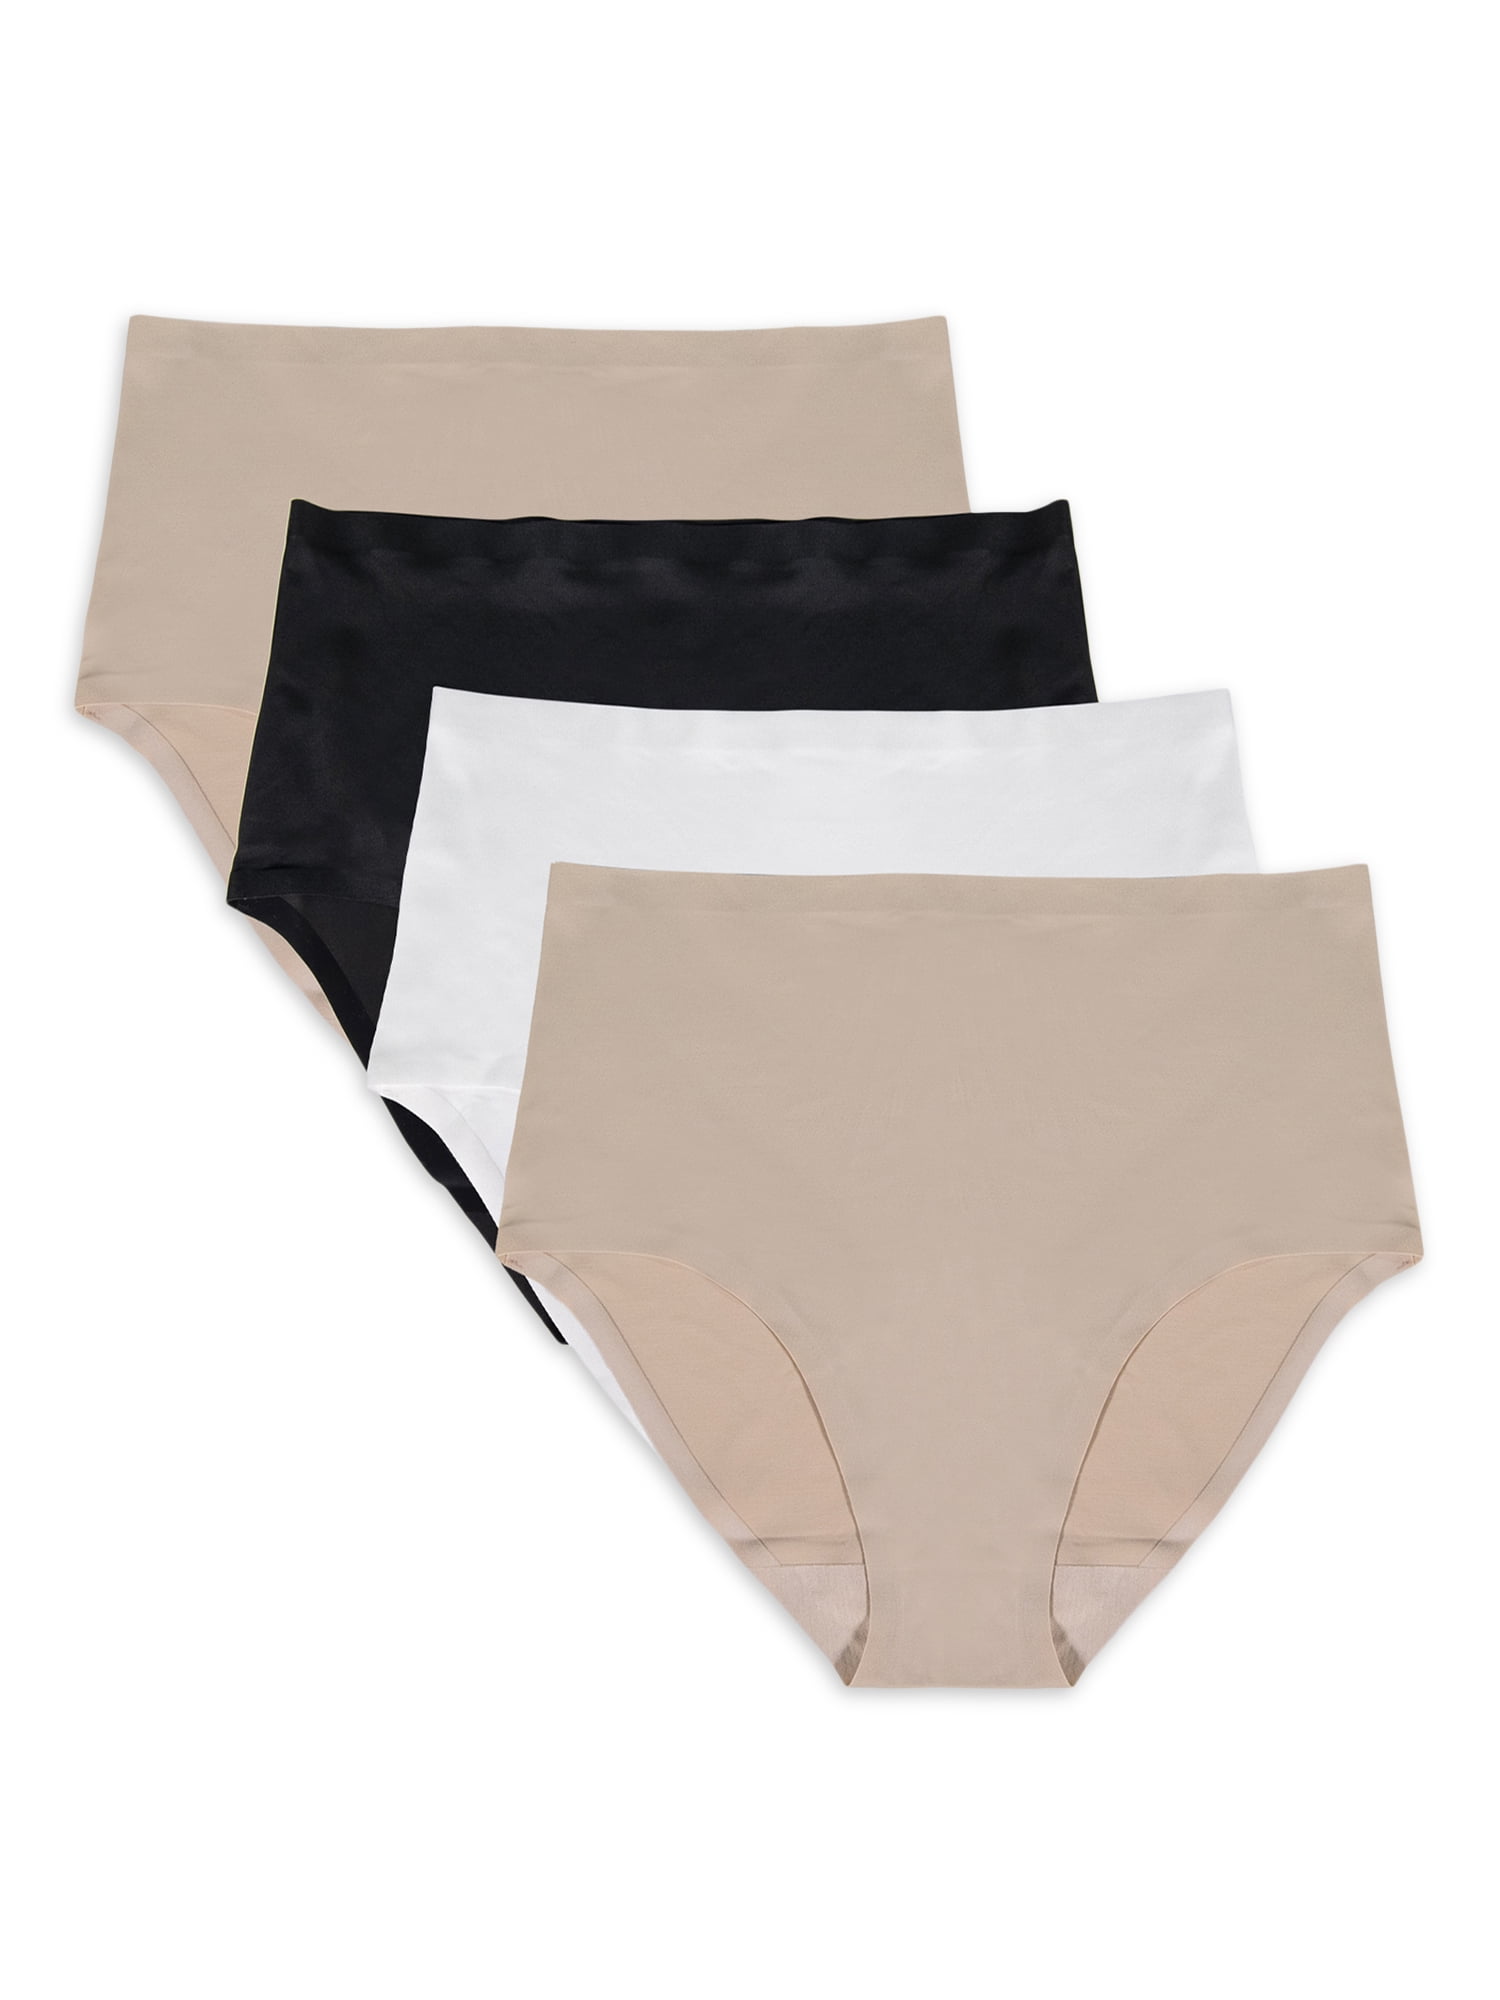 INNERSY Women's Plus Size XL-5XL Cotton Underwear High Waisted Briefs  Panties 4-Pack (2XL,Black) 